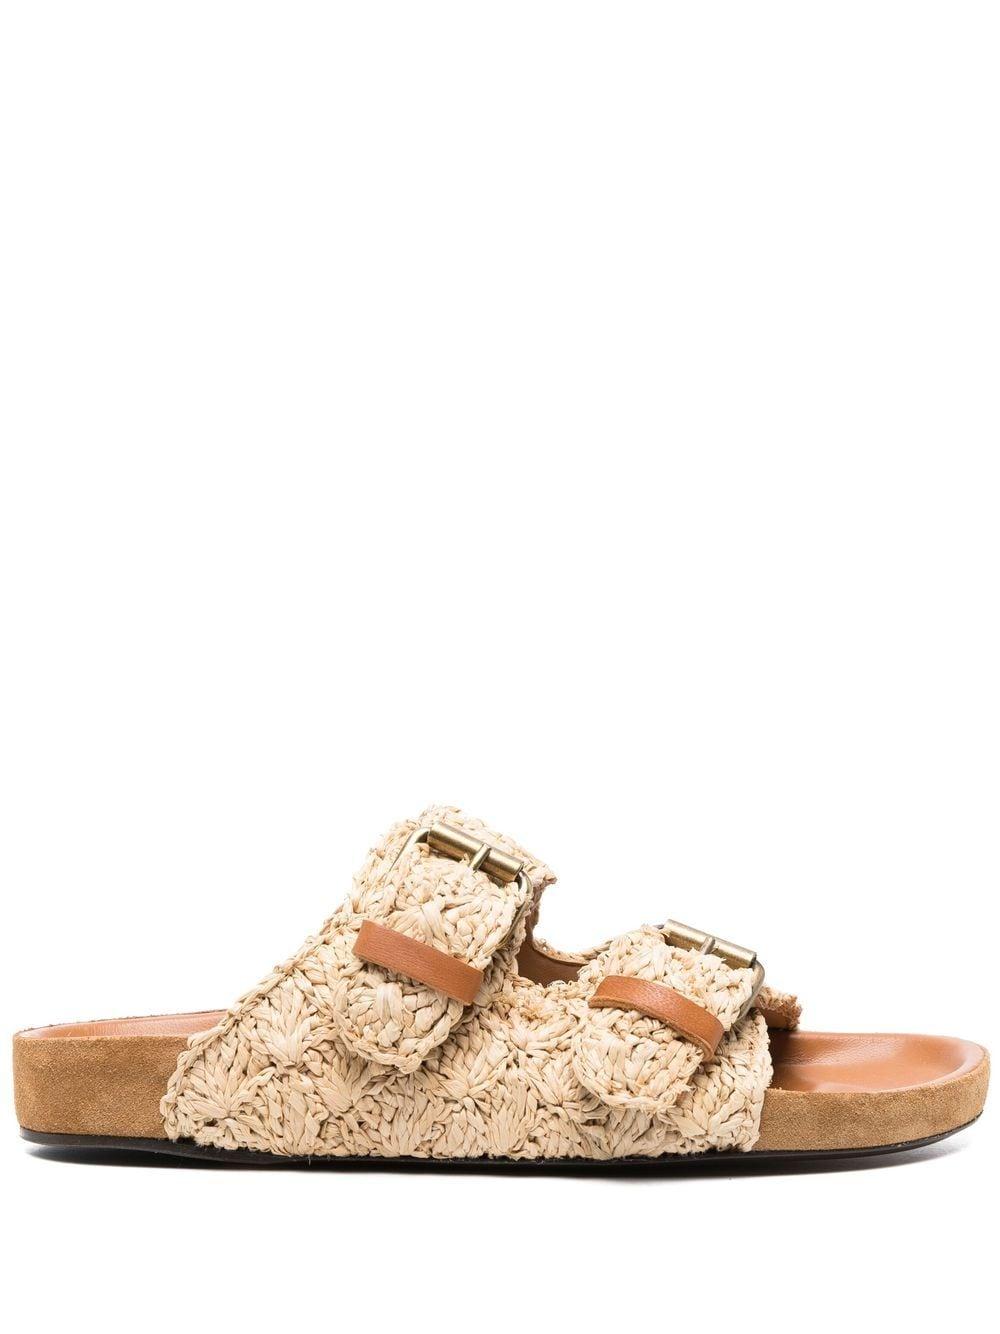 Isabel Marant Arizona Sandals in Natural | Lyst